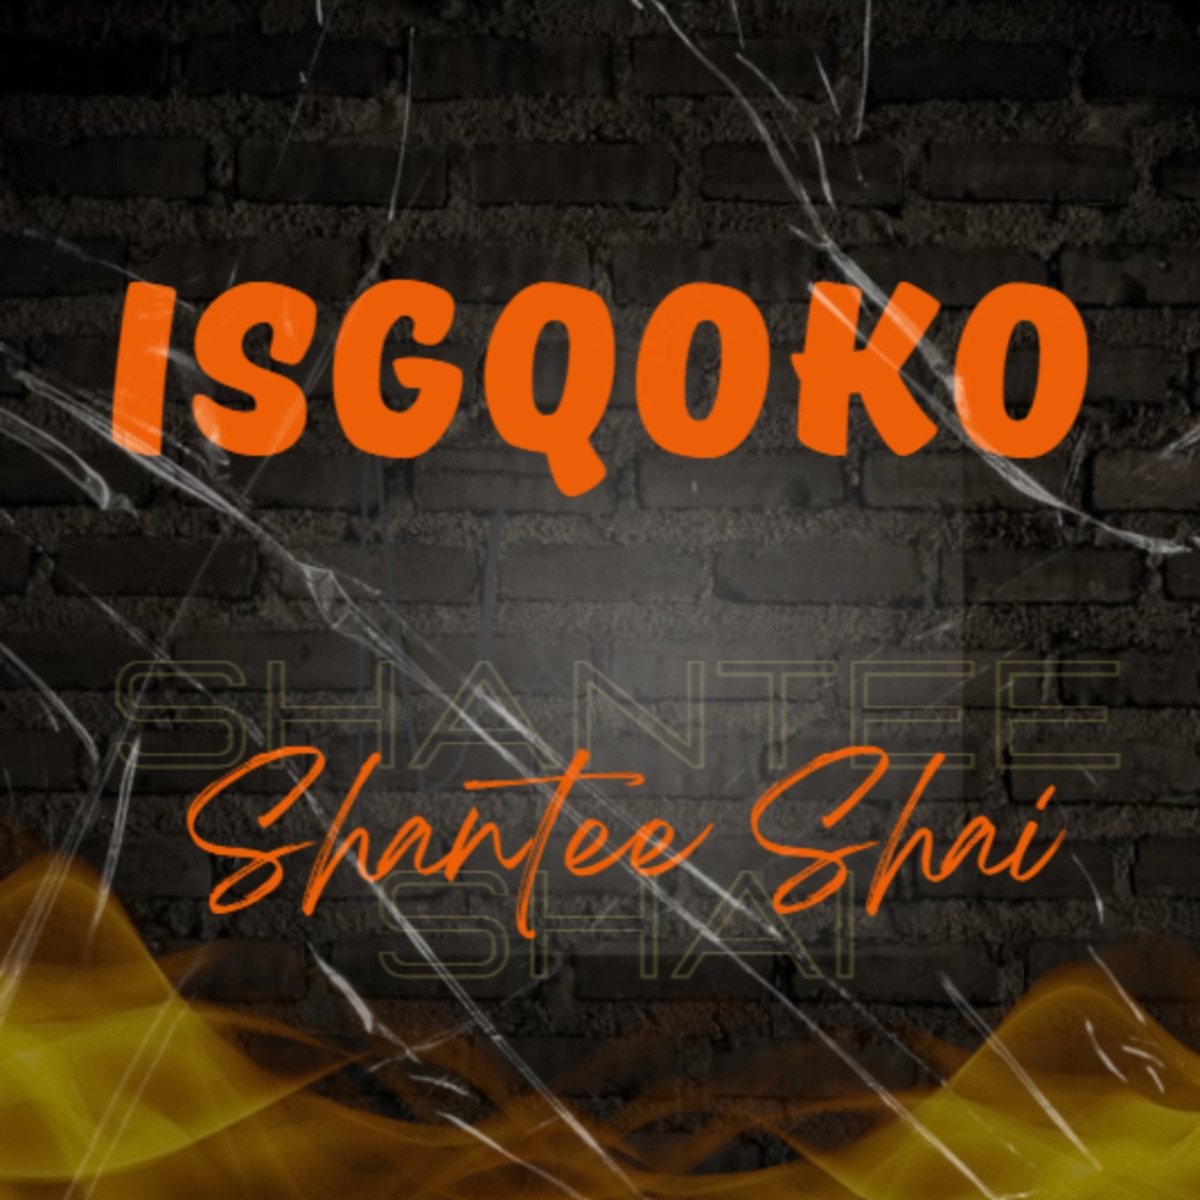 Shantee Shai - Isgqoko 1